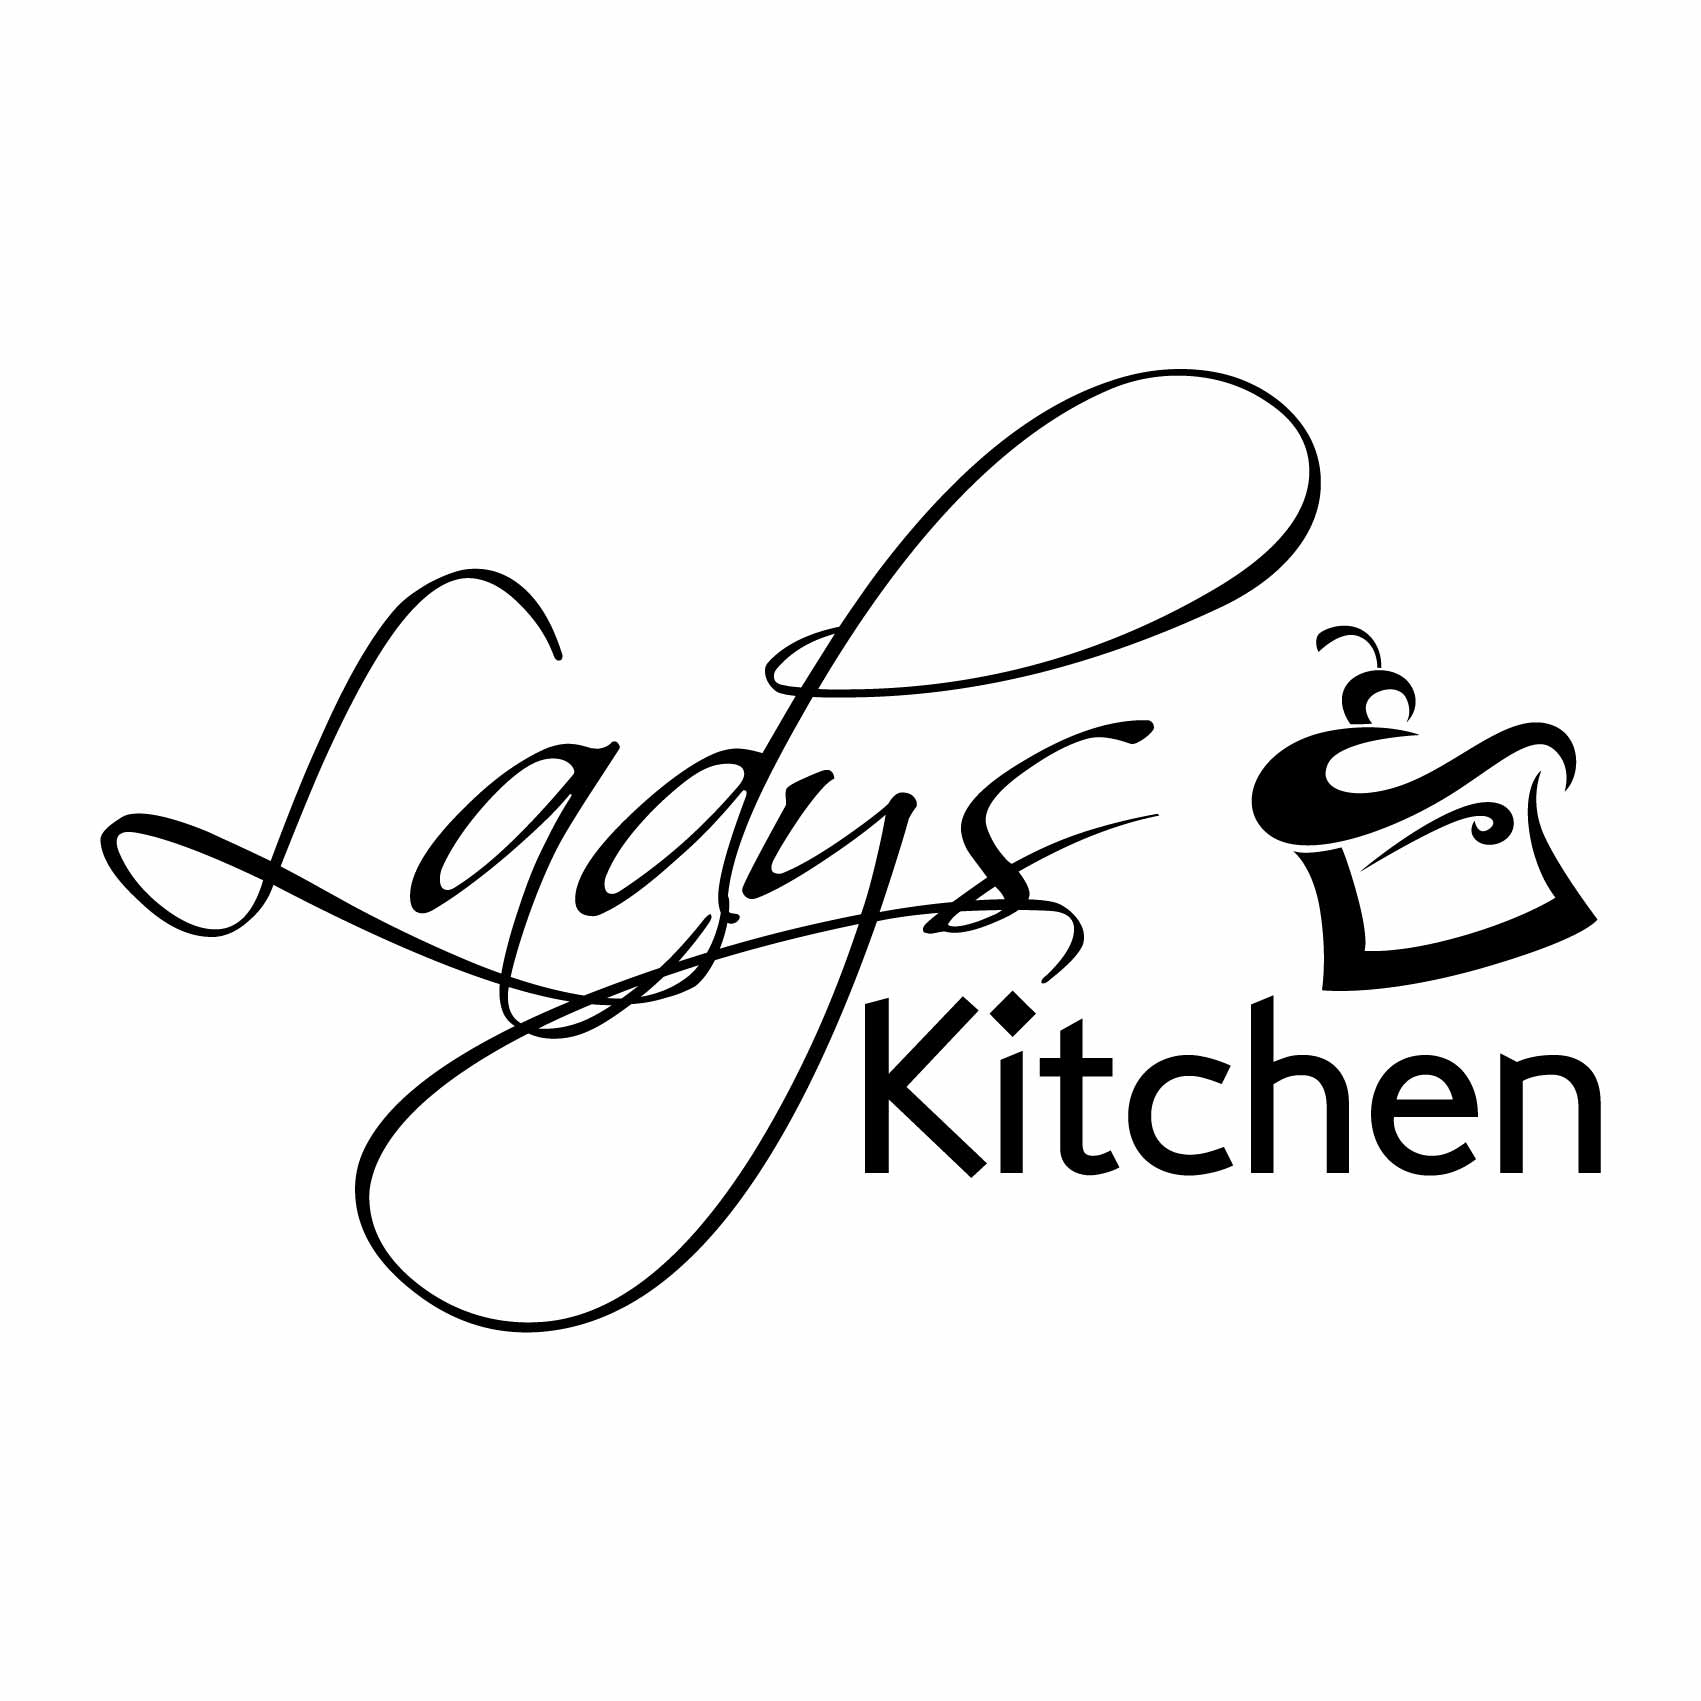 stickers-ladys-kitchen-cupcake-ref20cupcake-autocollant-muraux-cuisine-salle-a-manger-salon-sticker-mural-deco-gateau-cupcakes-gateaux-(2)